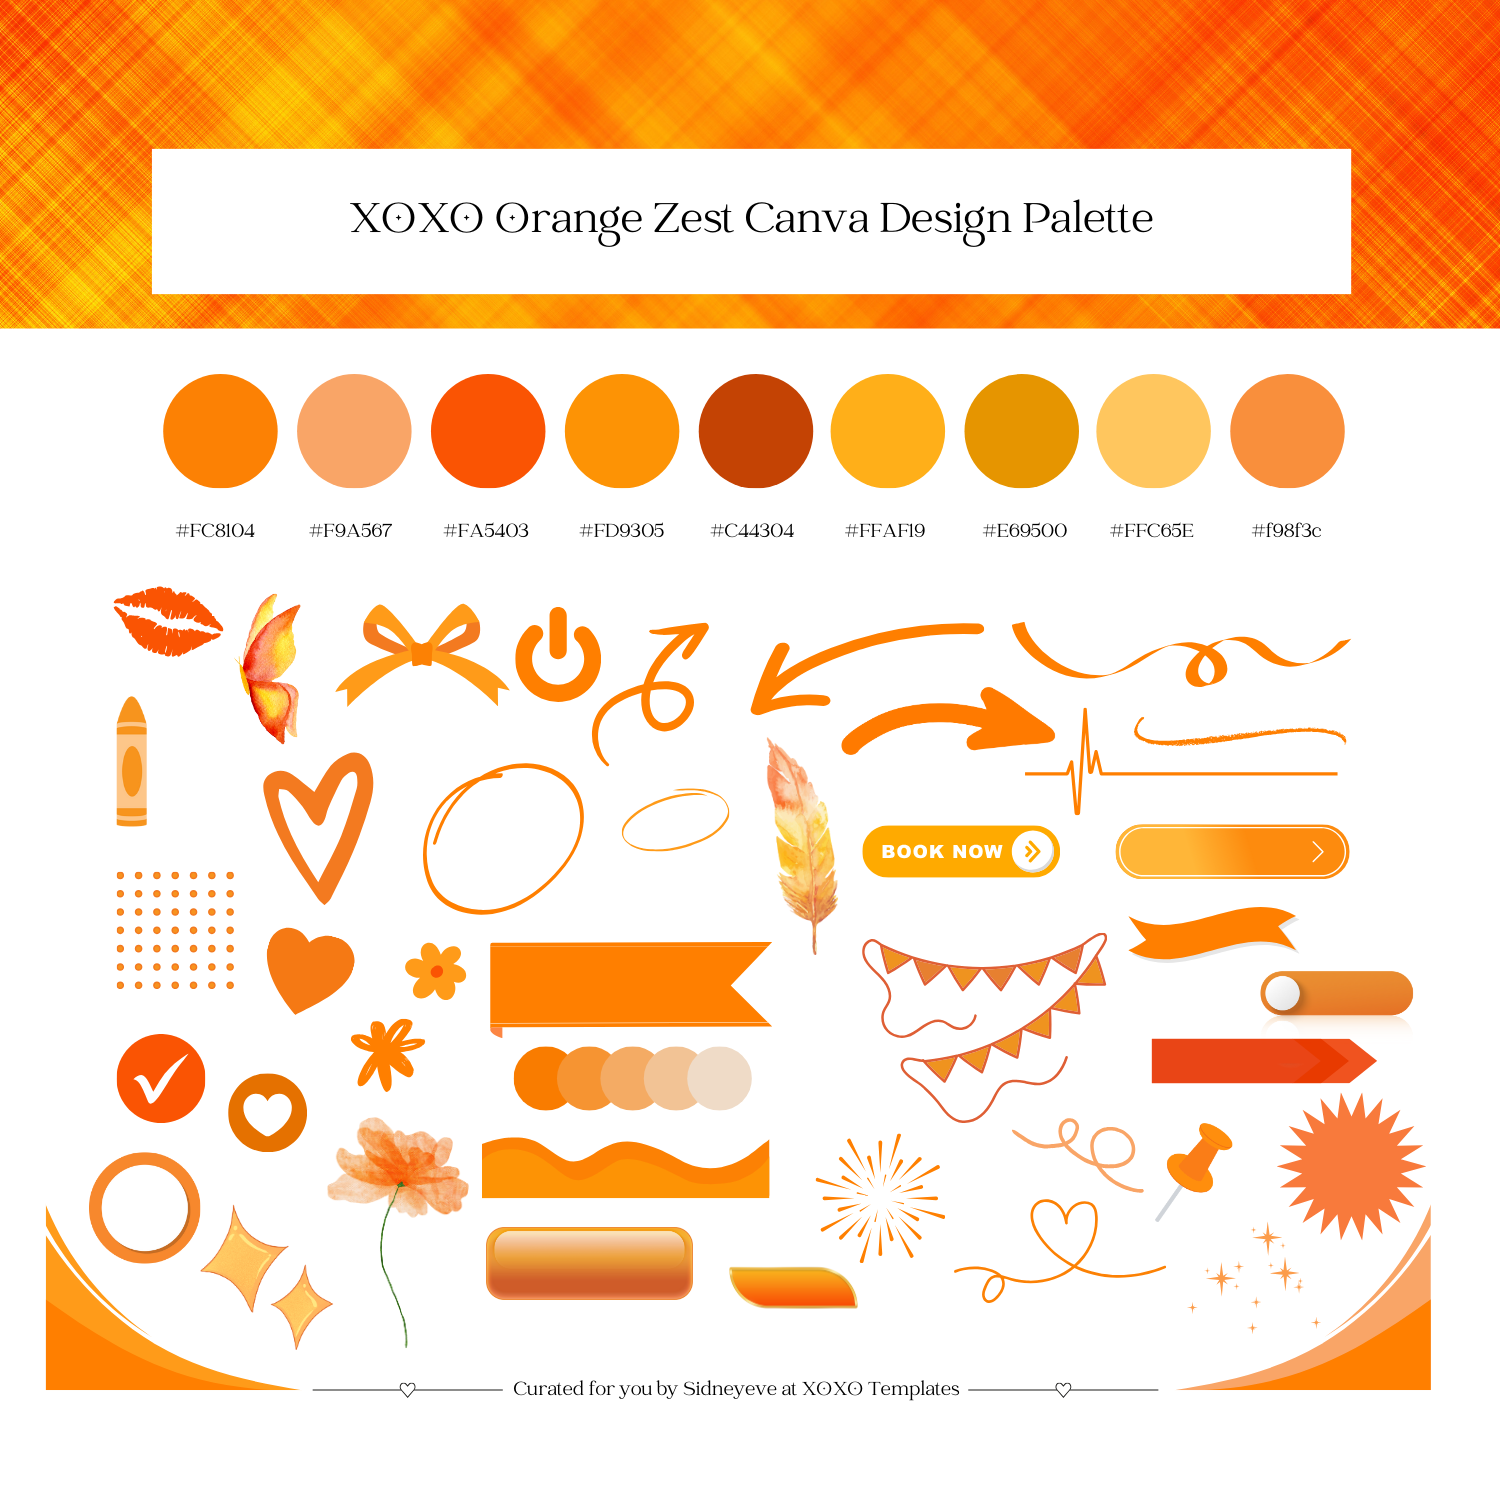 XOXO Orange Zest Canva Design Palette